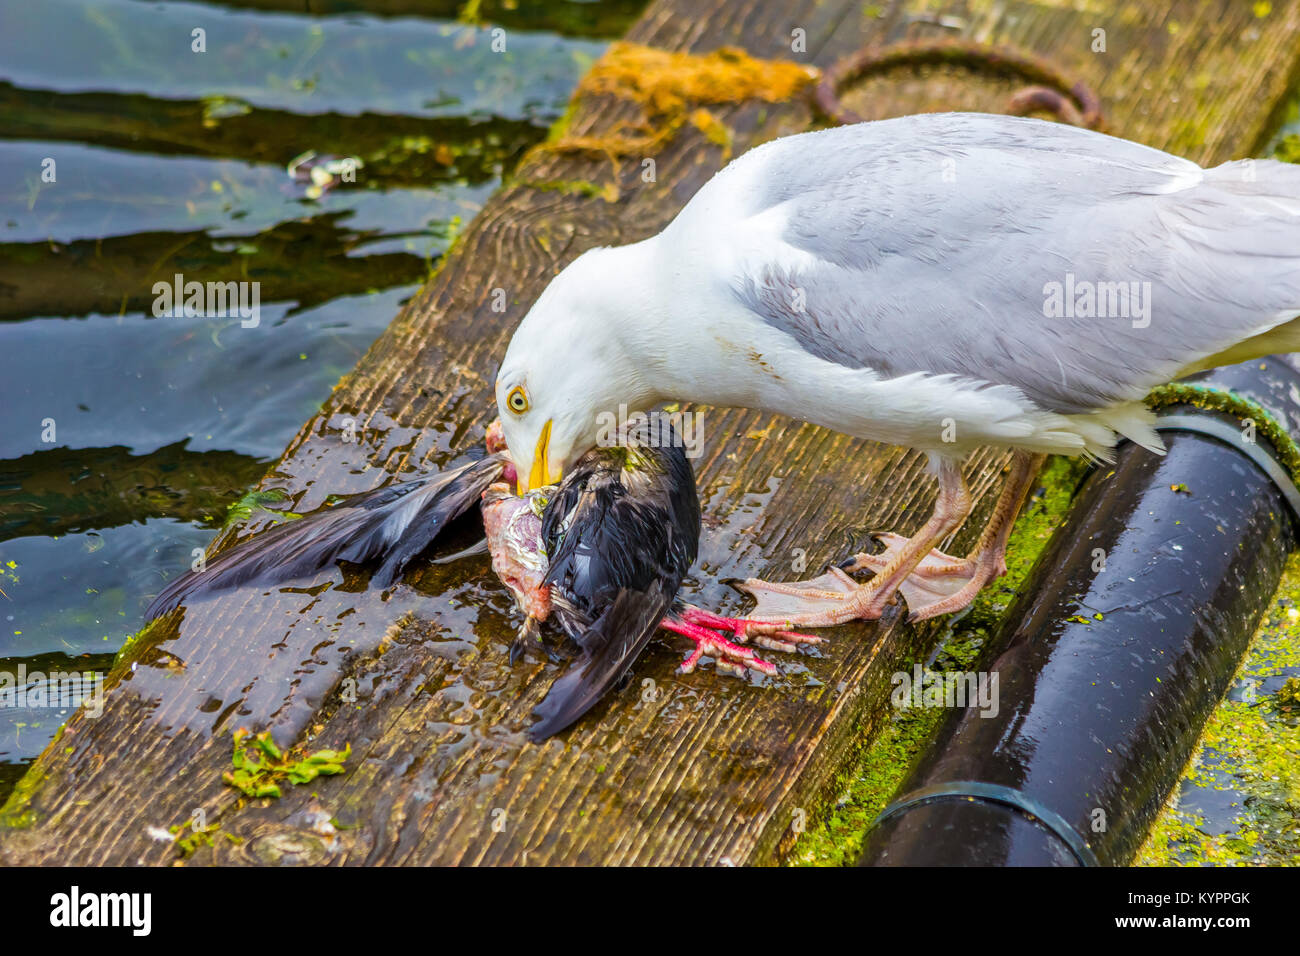 Seagull eating bird, Carnivore. Stock Photo